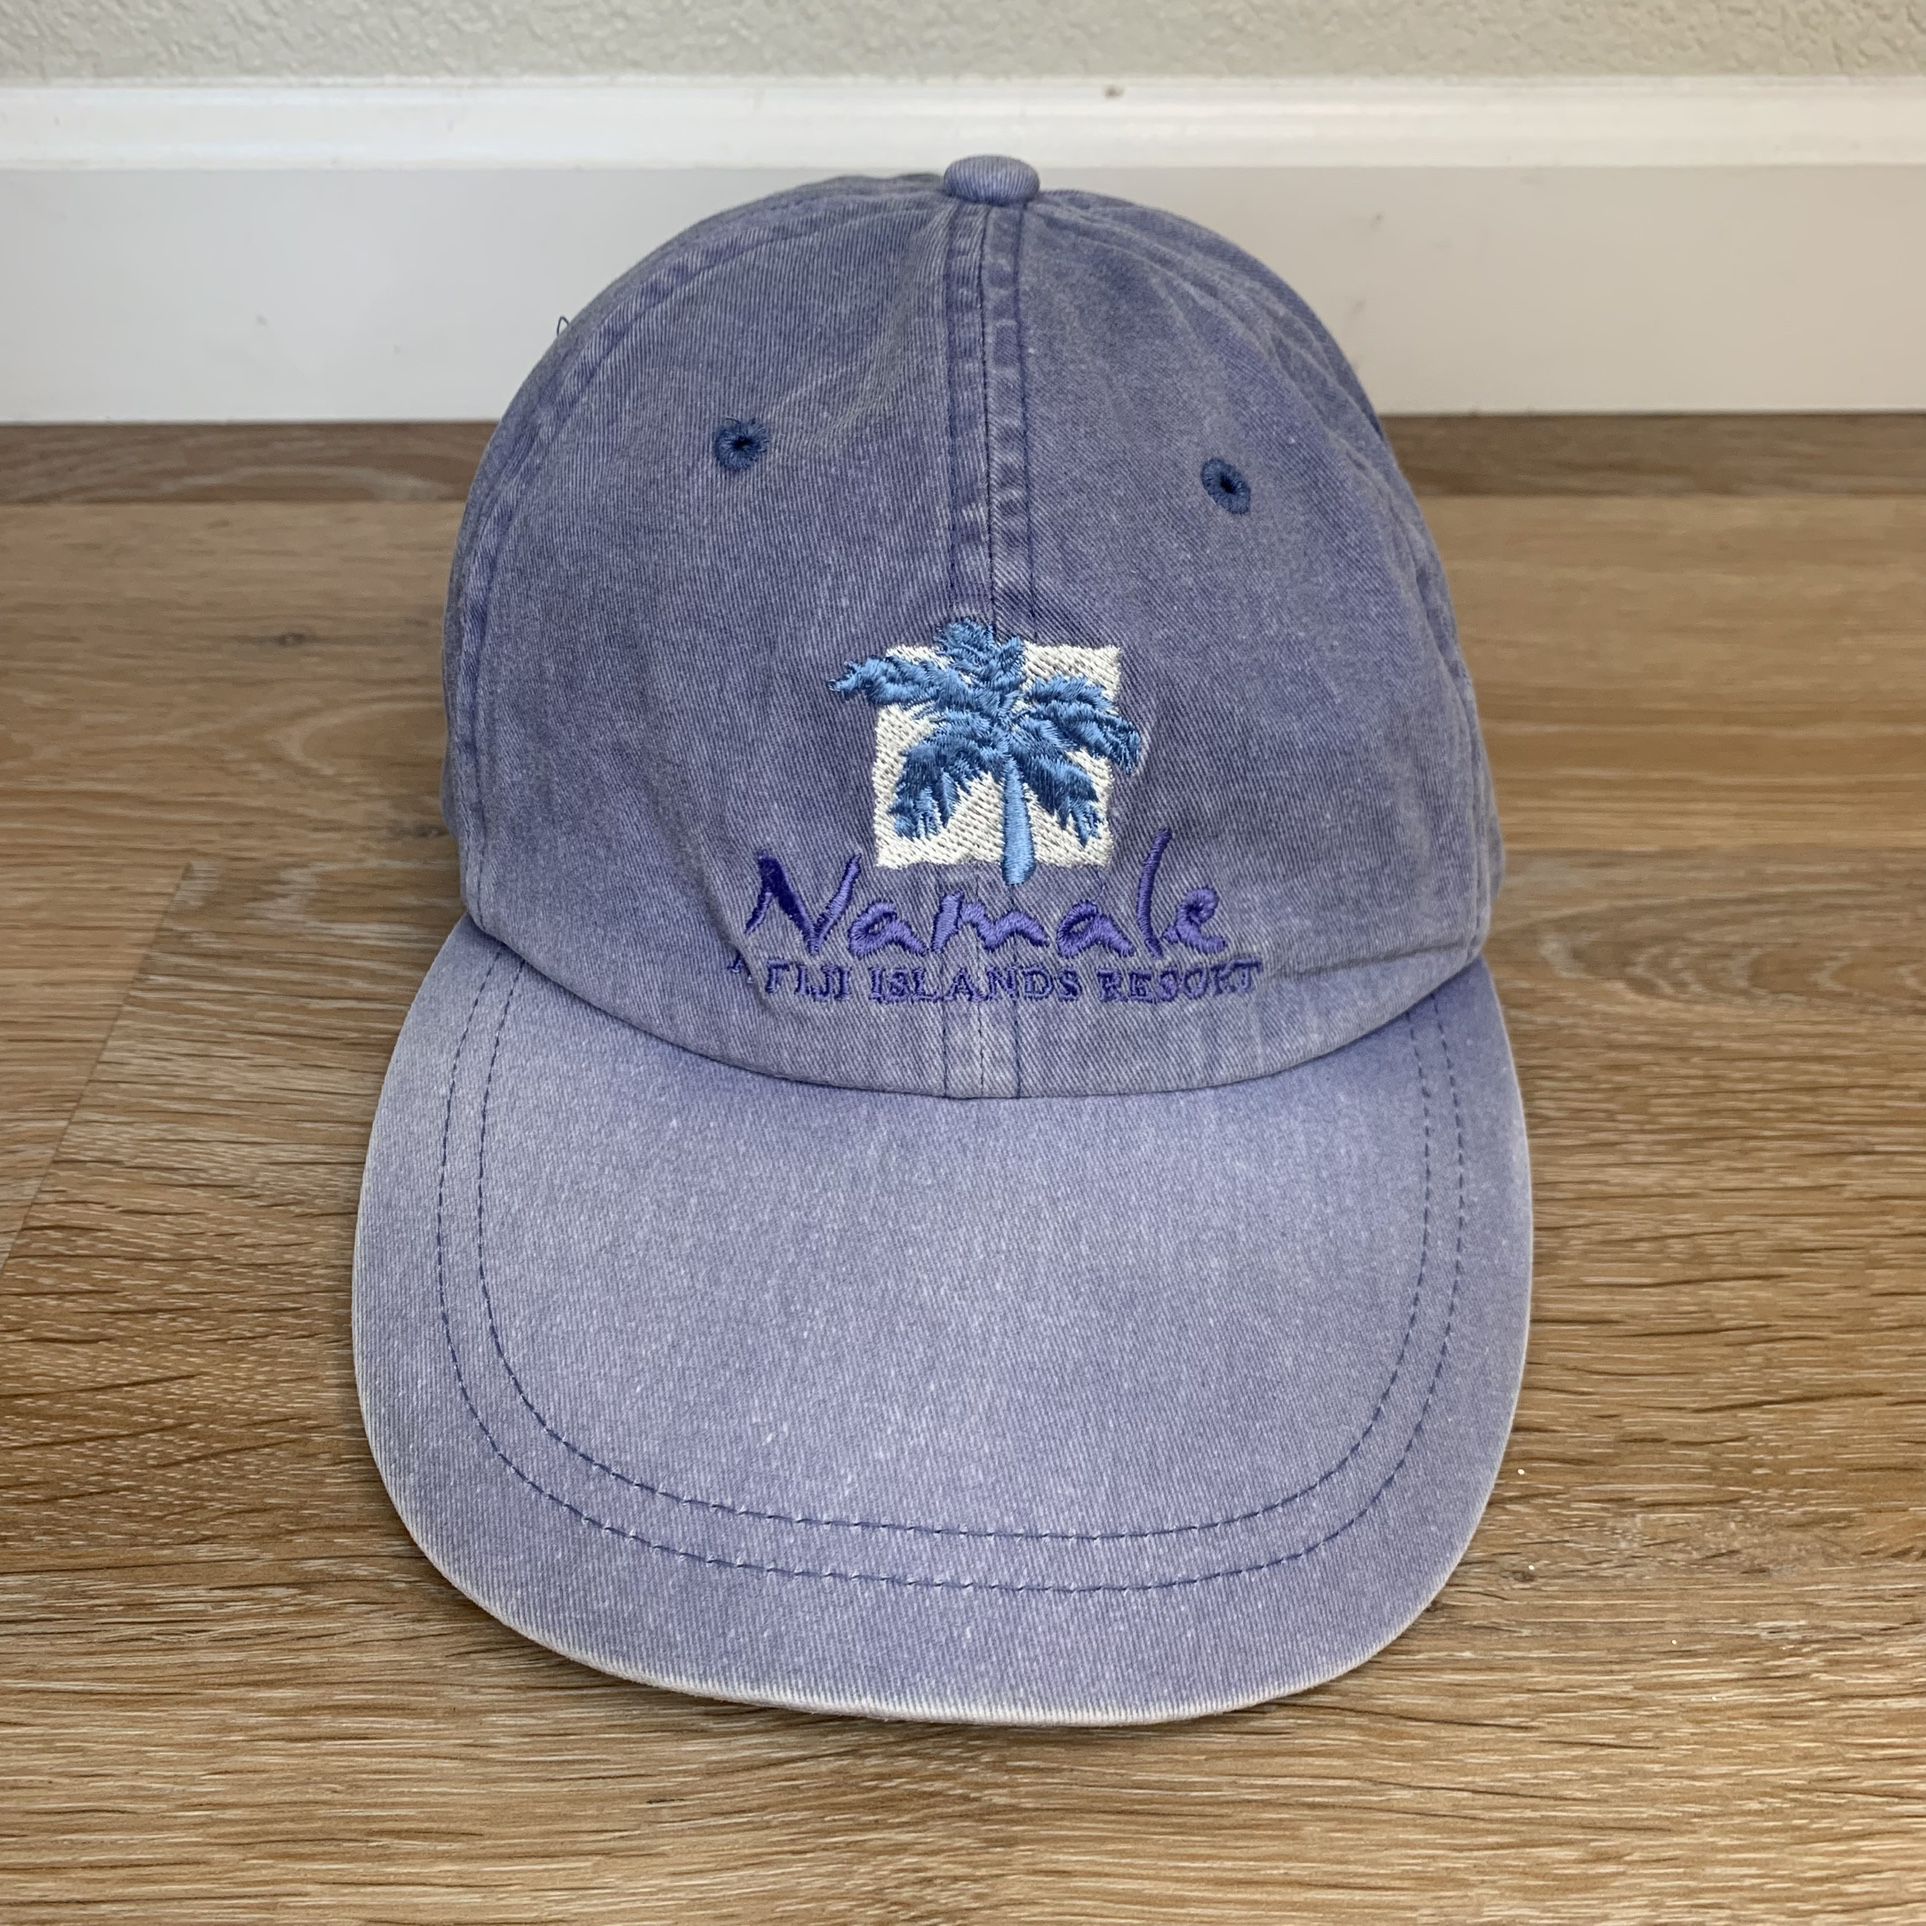 Adams Namale Island Resort Embroidered Adjustable Strapback Hat